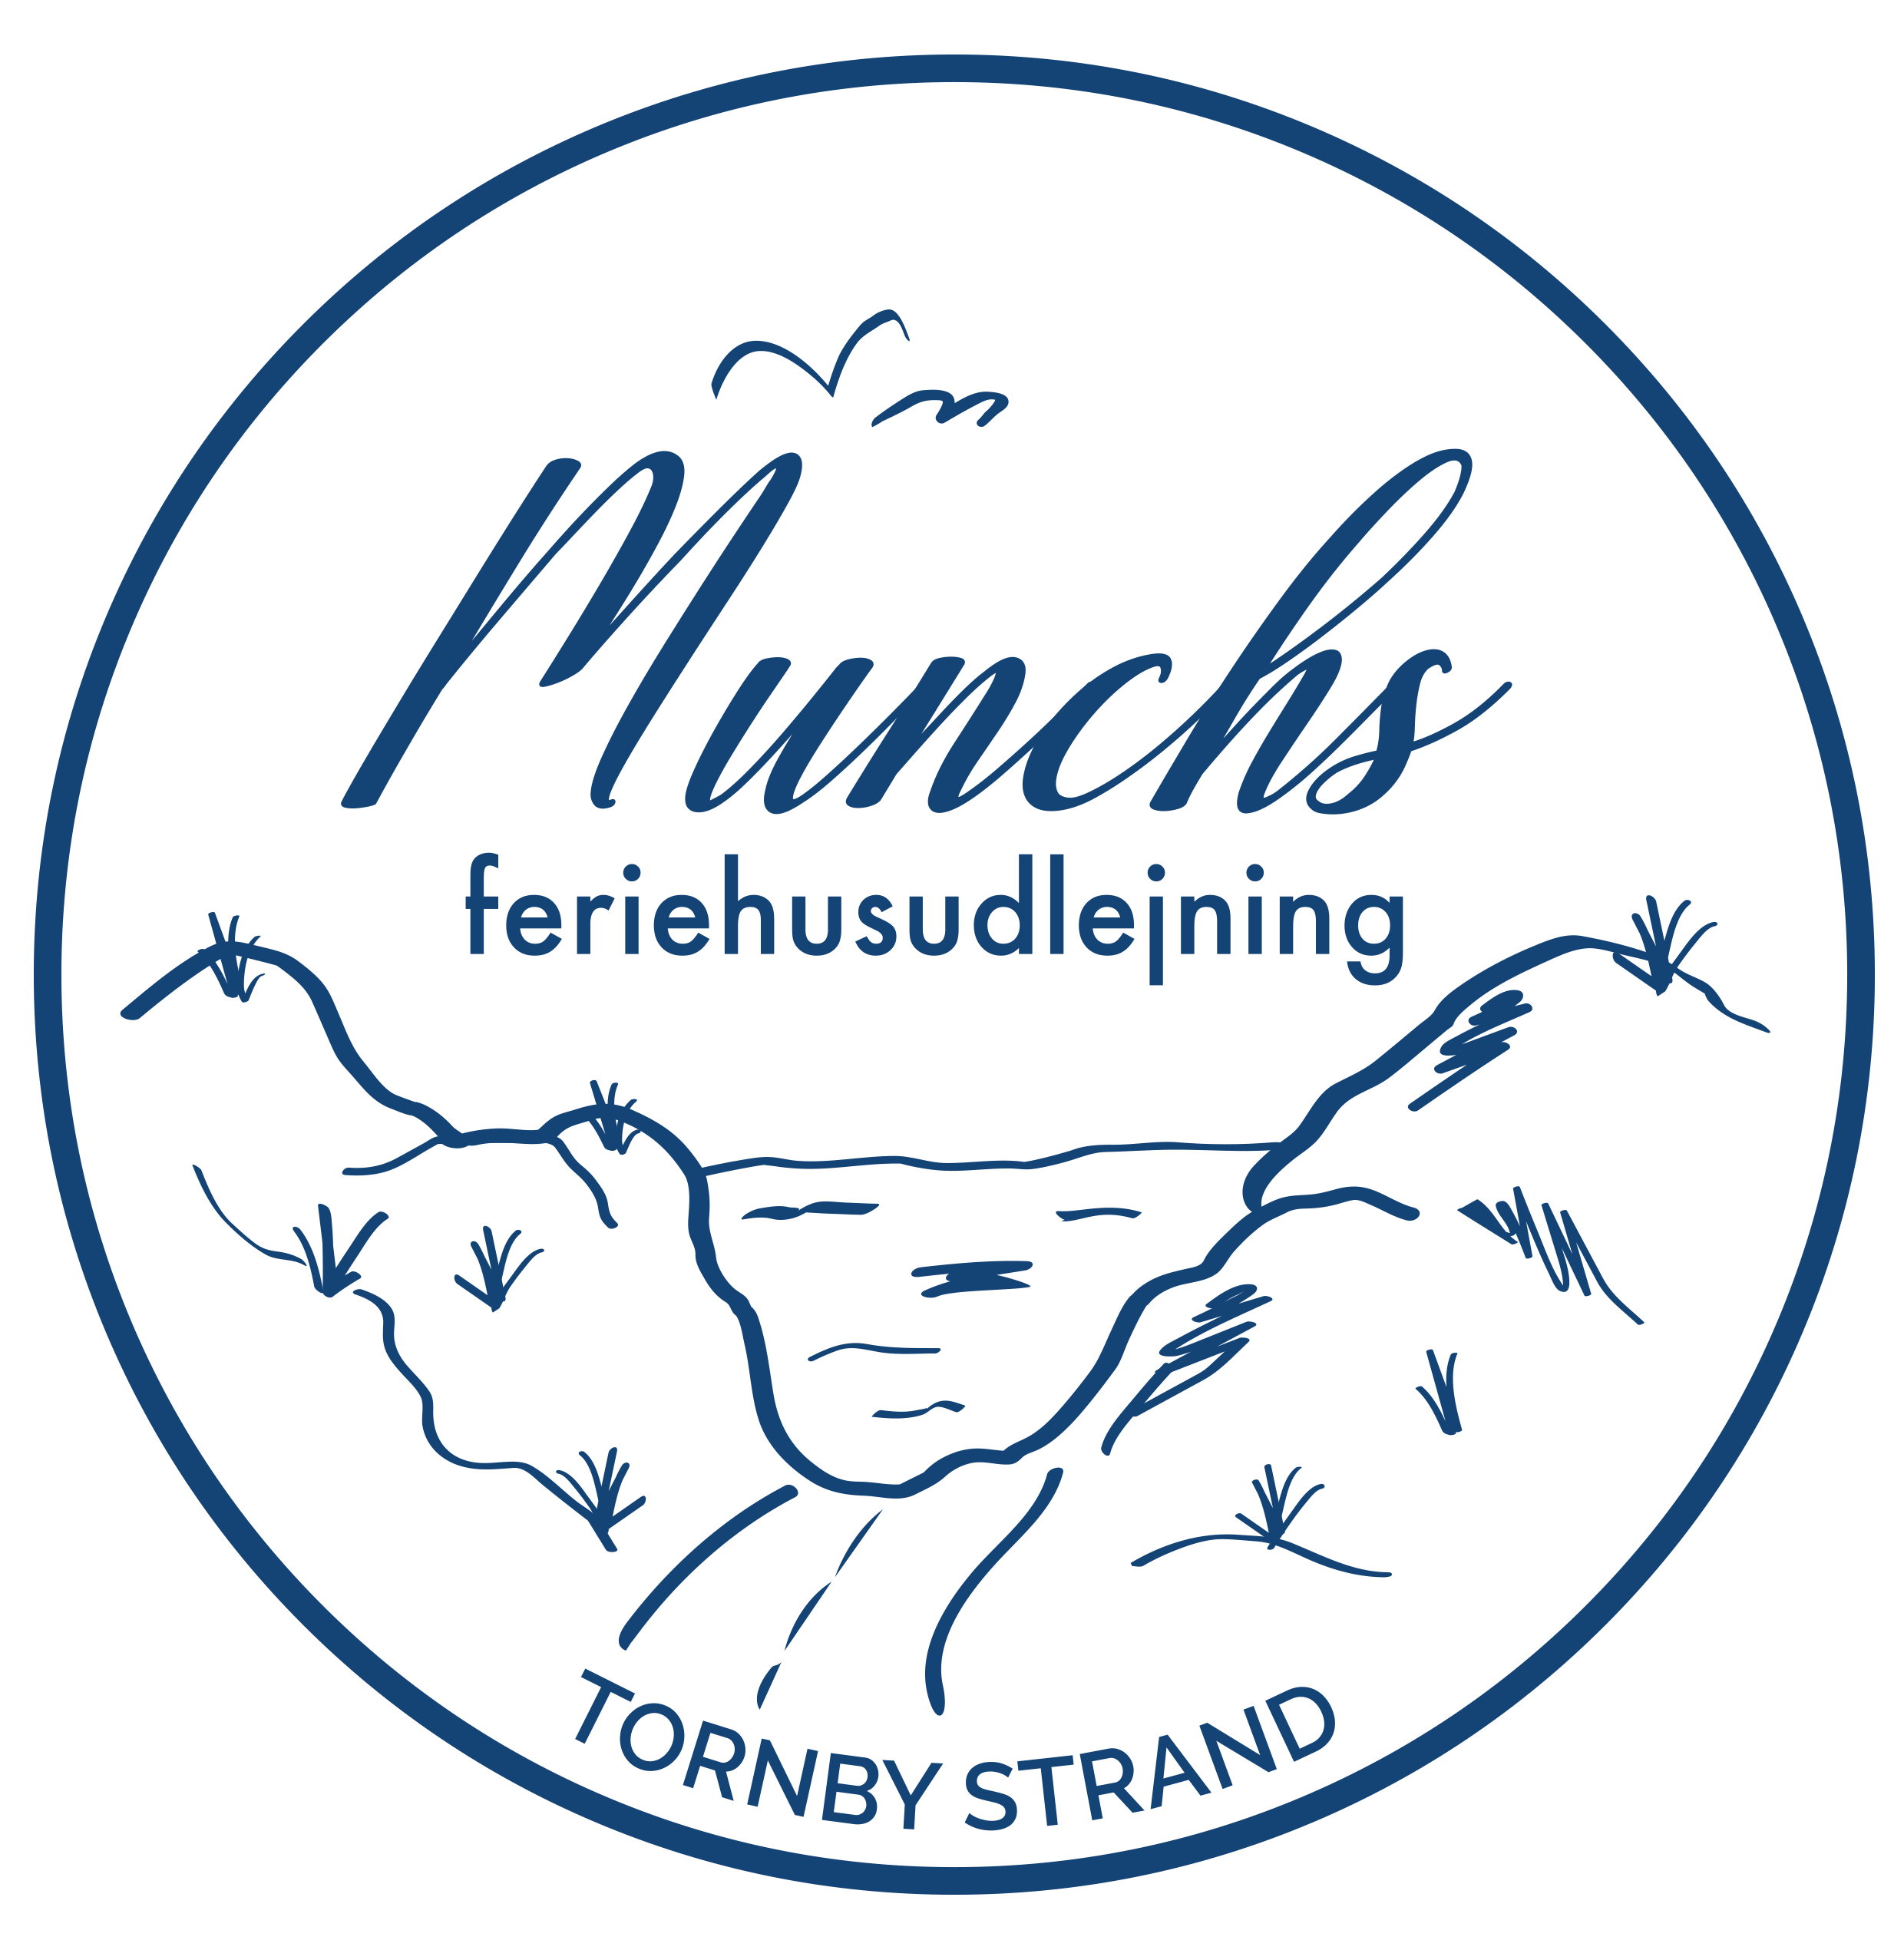 Tornby Feriehus Udlejning v/Britta Munch